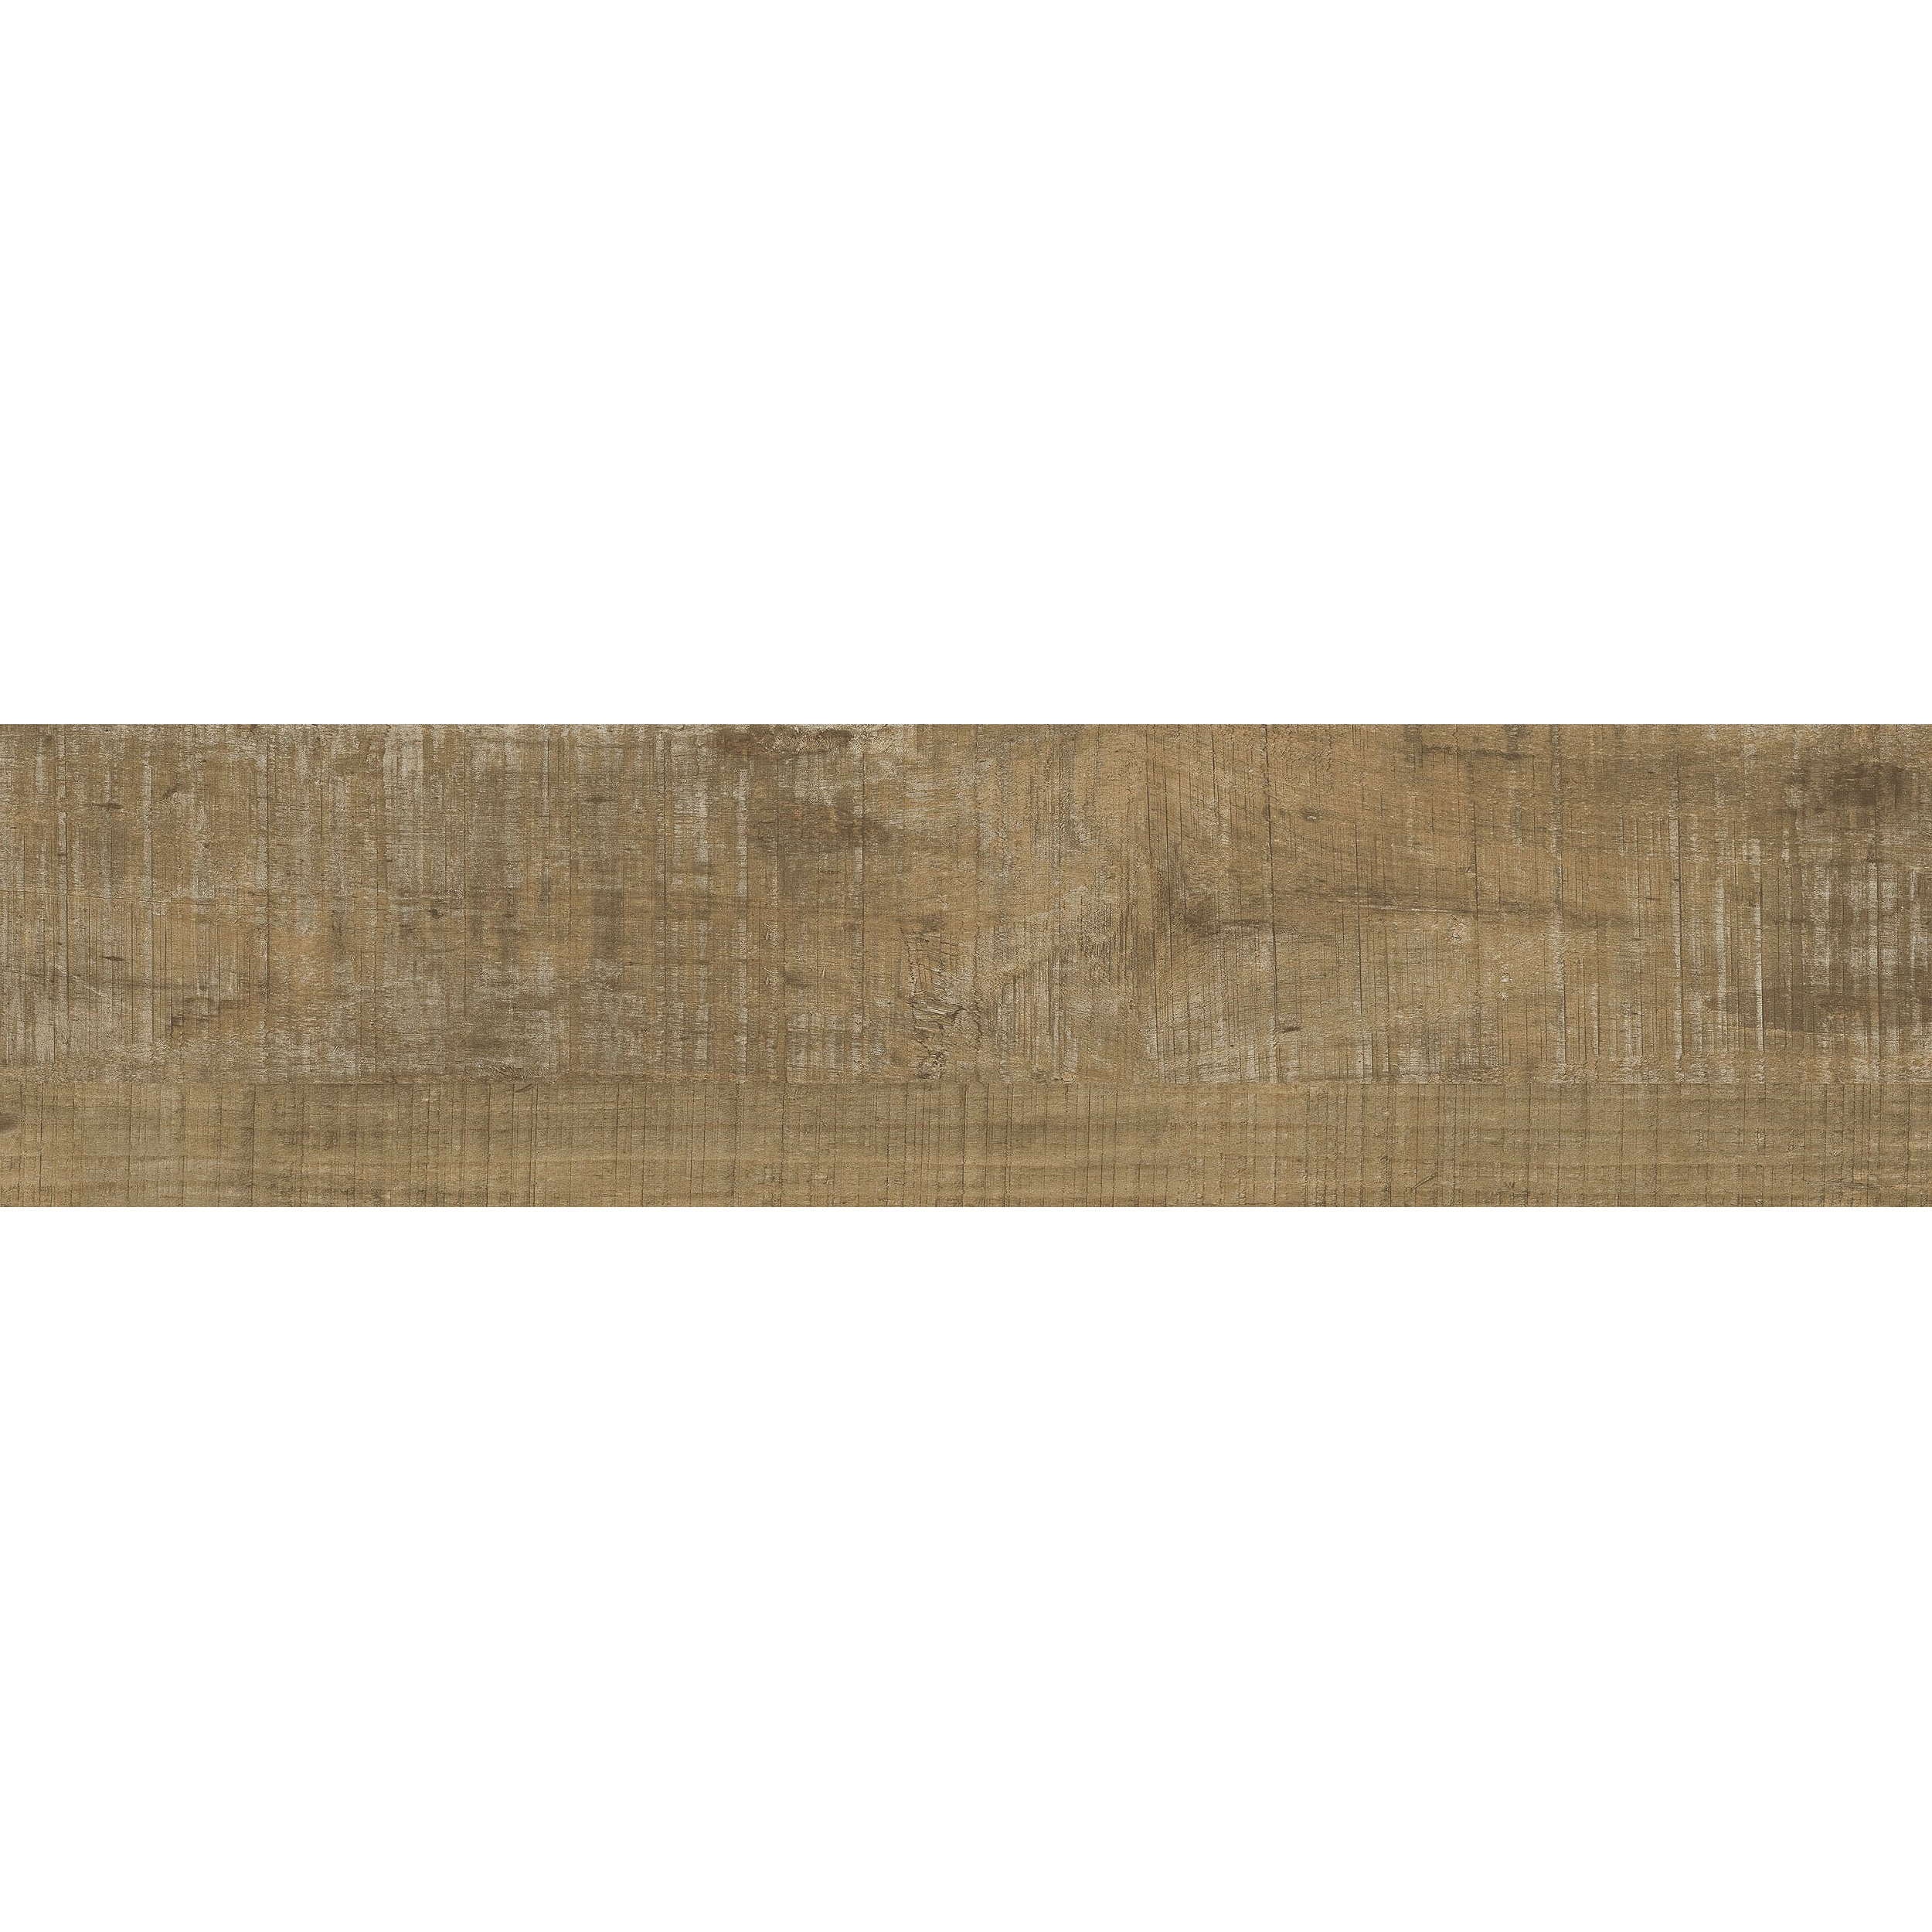 Textured Woodgrains LVT In Distressed Hickory afbeeldingnummer 11